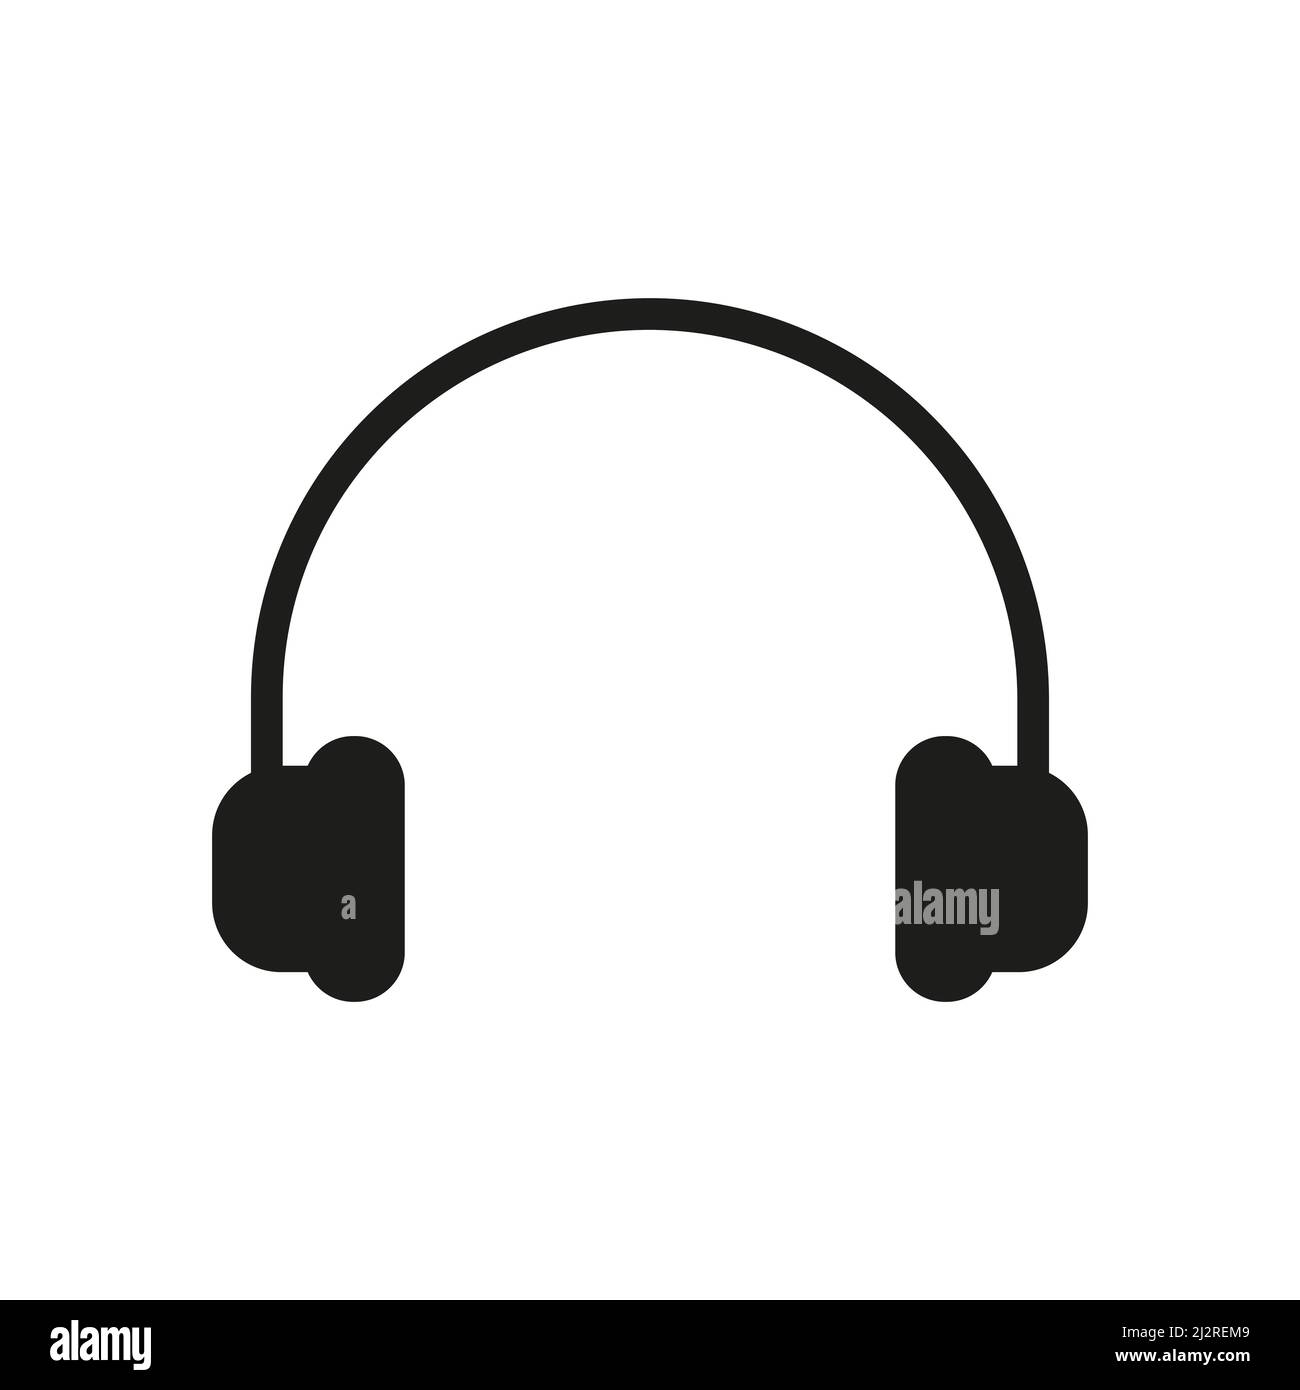 Headphone vector icon. Music element. Earphones symbol. Illustration isolated on white background Stock Vector